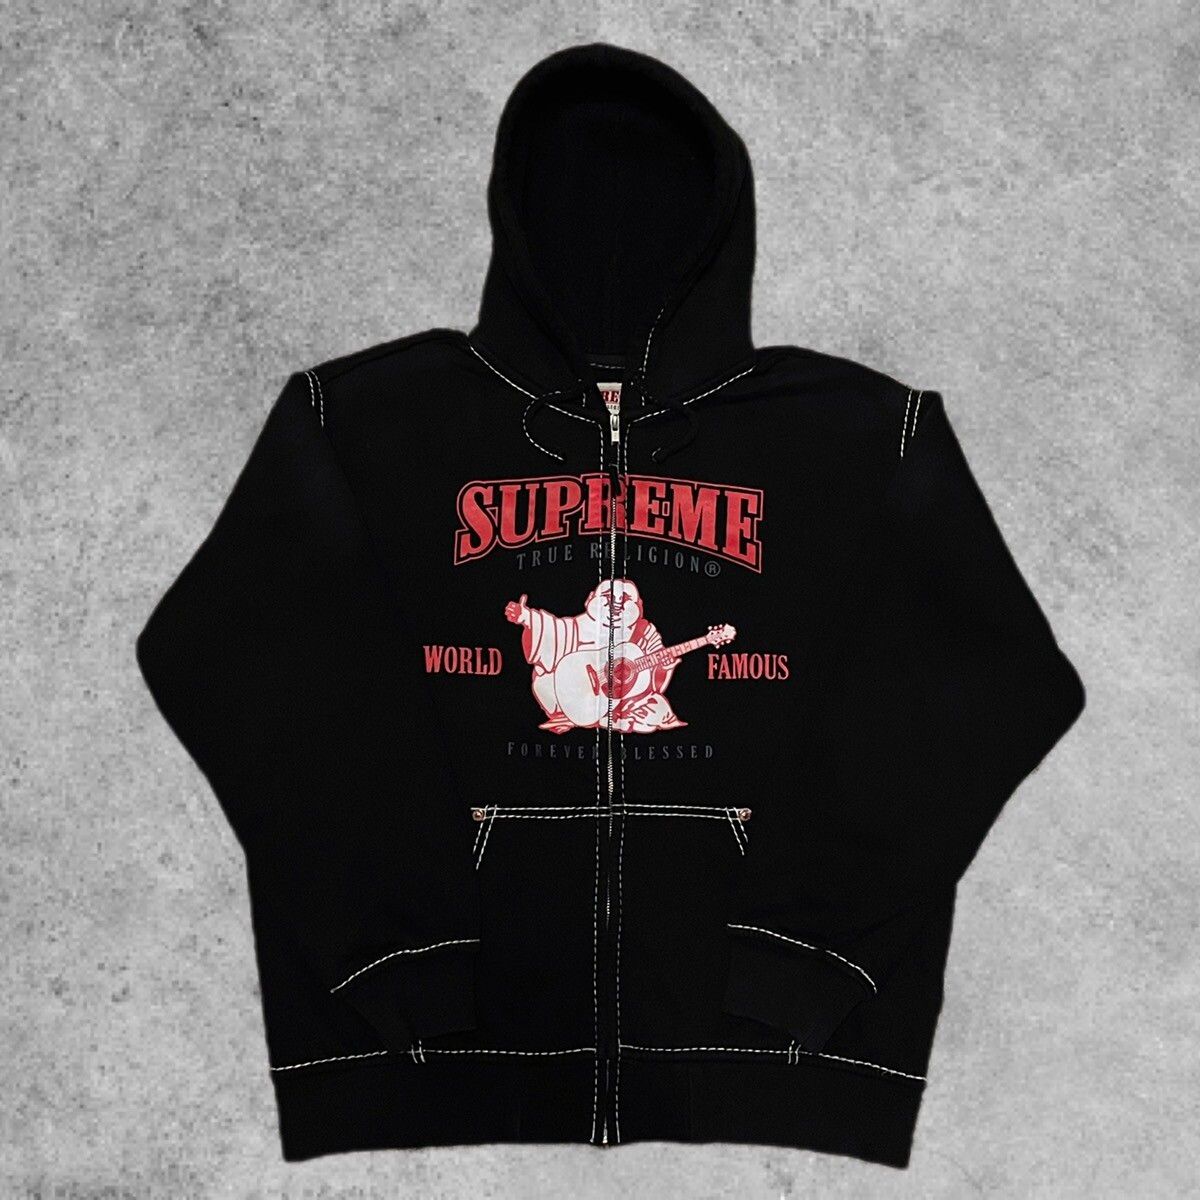 Supreme Supreme True Religion Zip Up Hooded Sweatshirt Size US L / EU 52-54 / 3 - 1 Preview